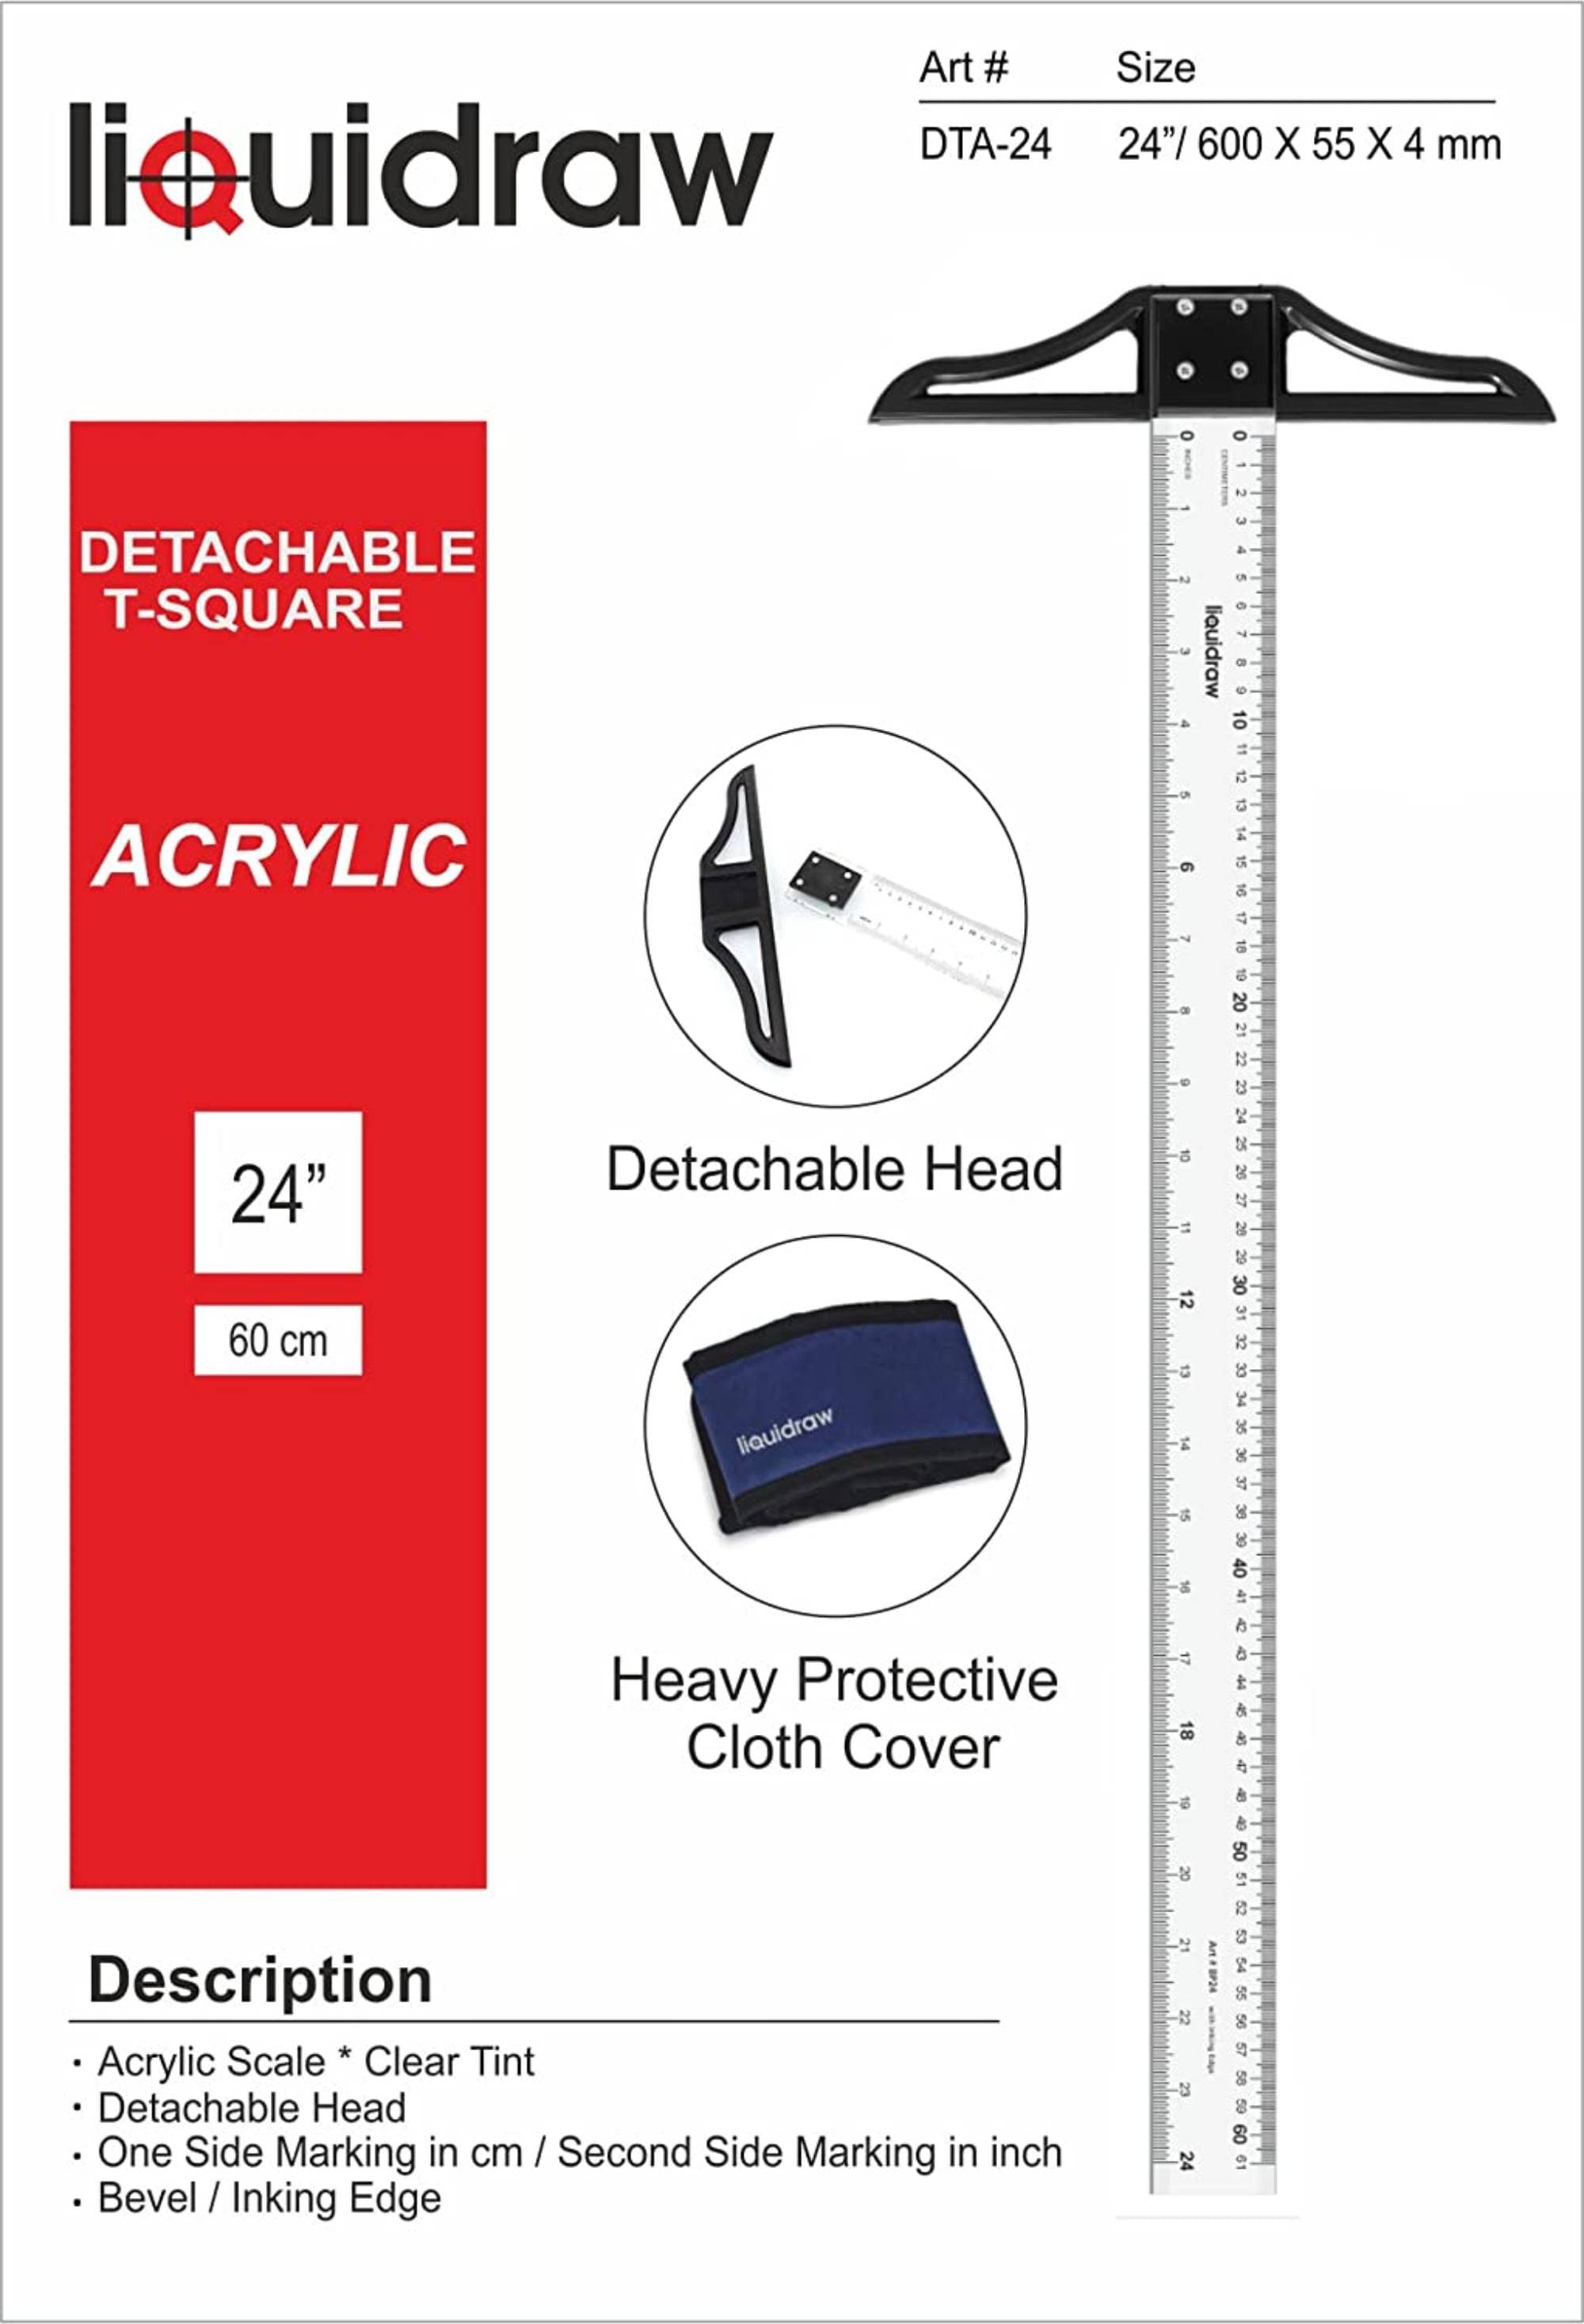 APEX Plastic Metric Double Side T Square Ruler (45cm,18 inch / 60 cm,24 inch)